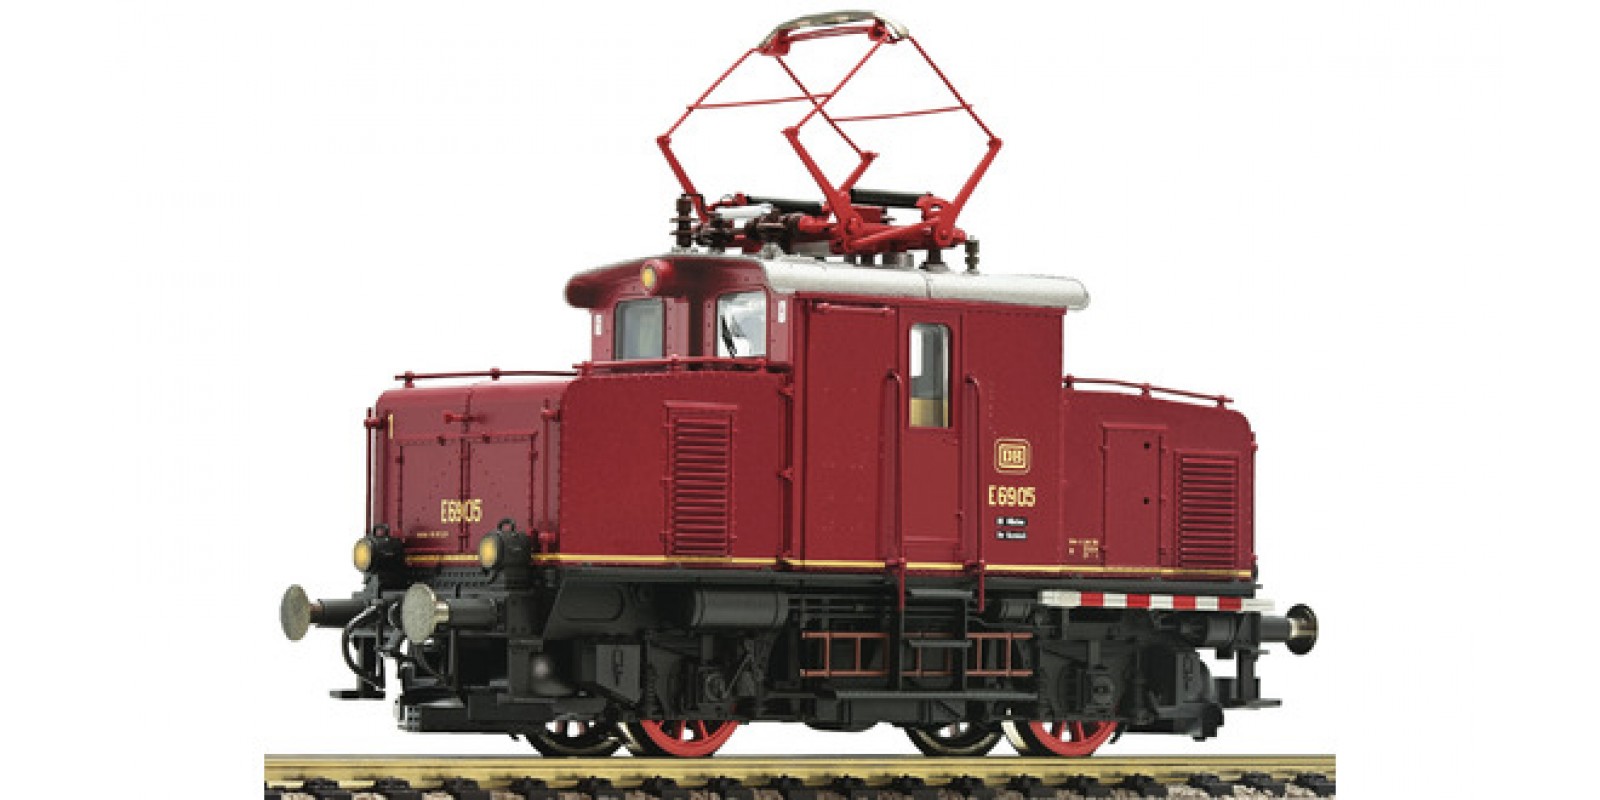 FL430001 - Electric locomotive E 69 05, DB, DC, Analog